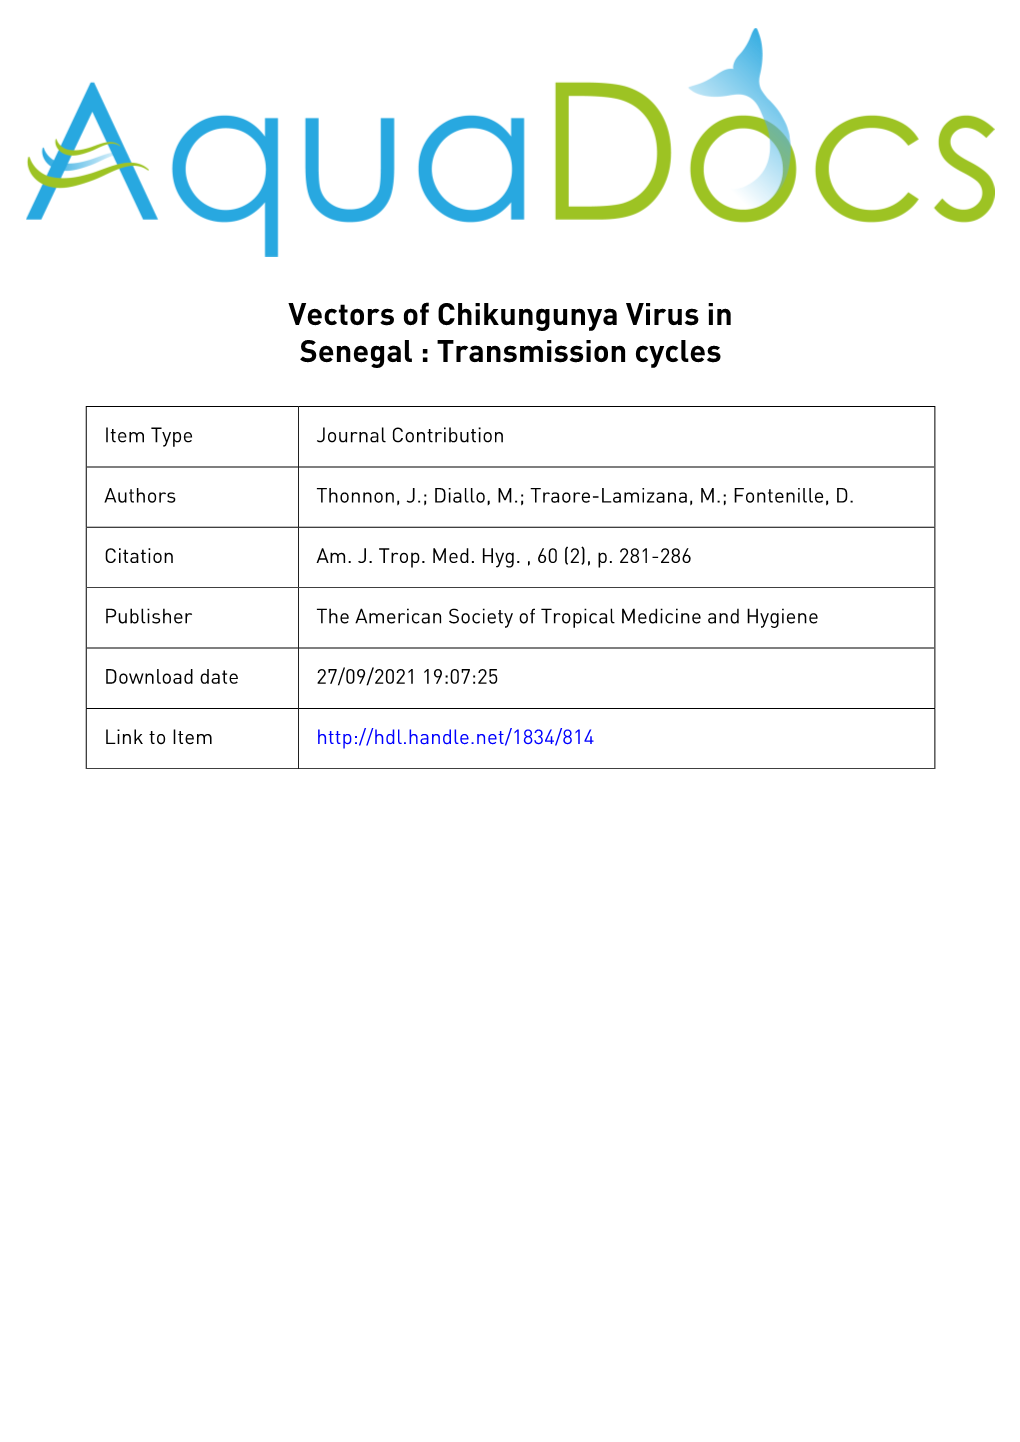 Vectors of Chikungunya Virus in Senegal: Current Data and Transmission Cycles